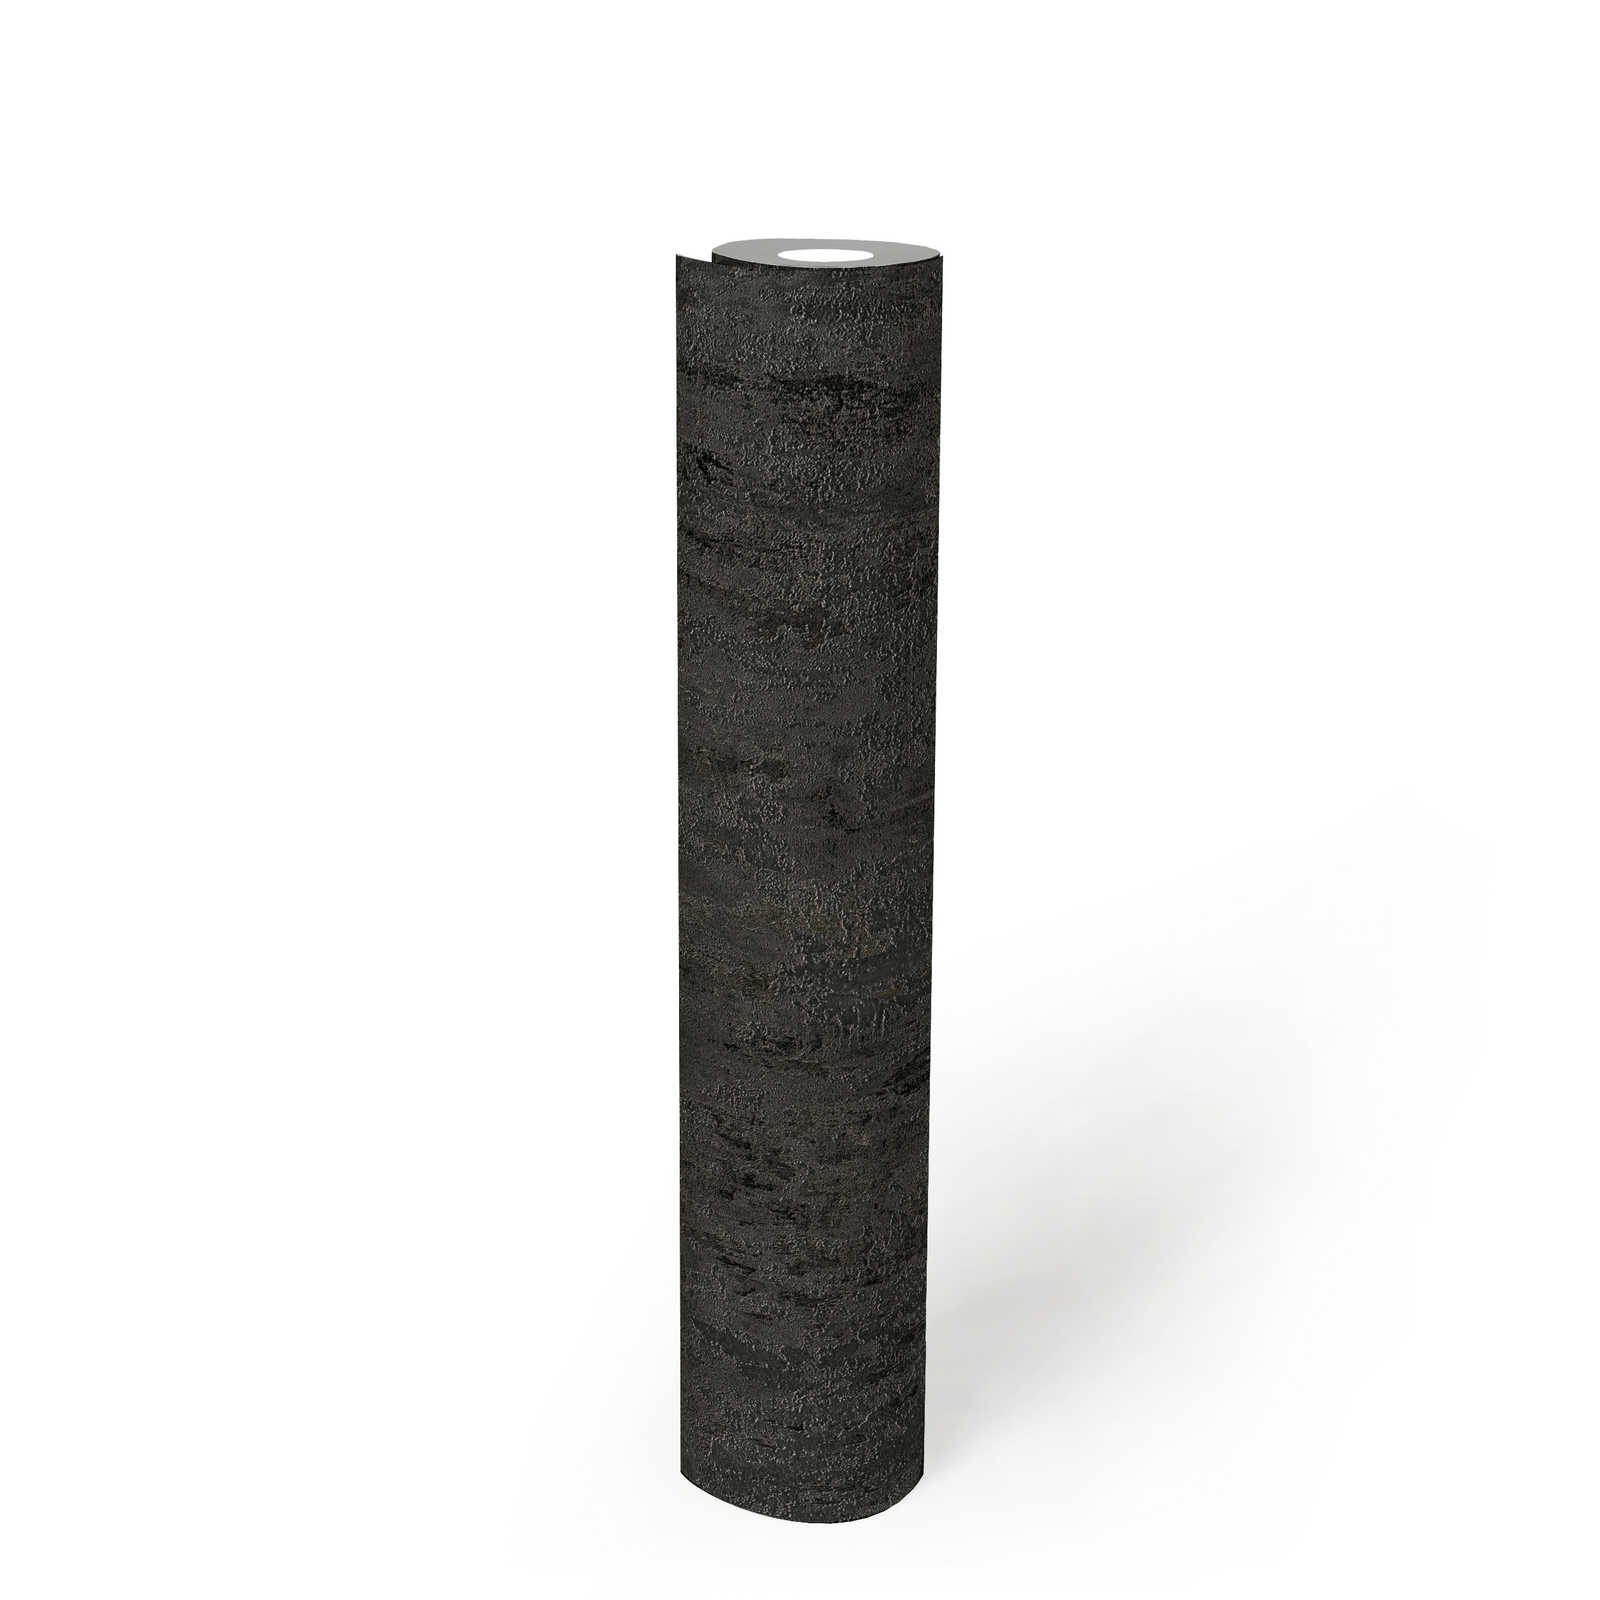             Rustic structure wallpaper metal optics anthracite - black, silver, grey
        